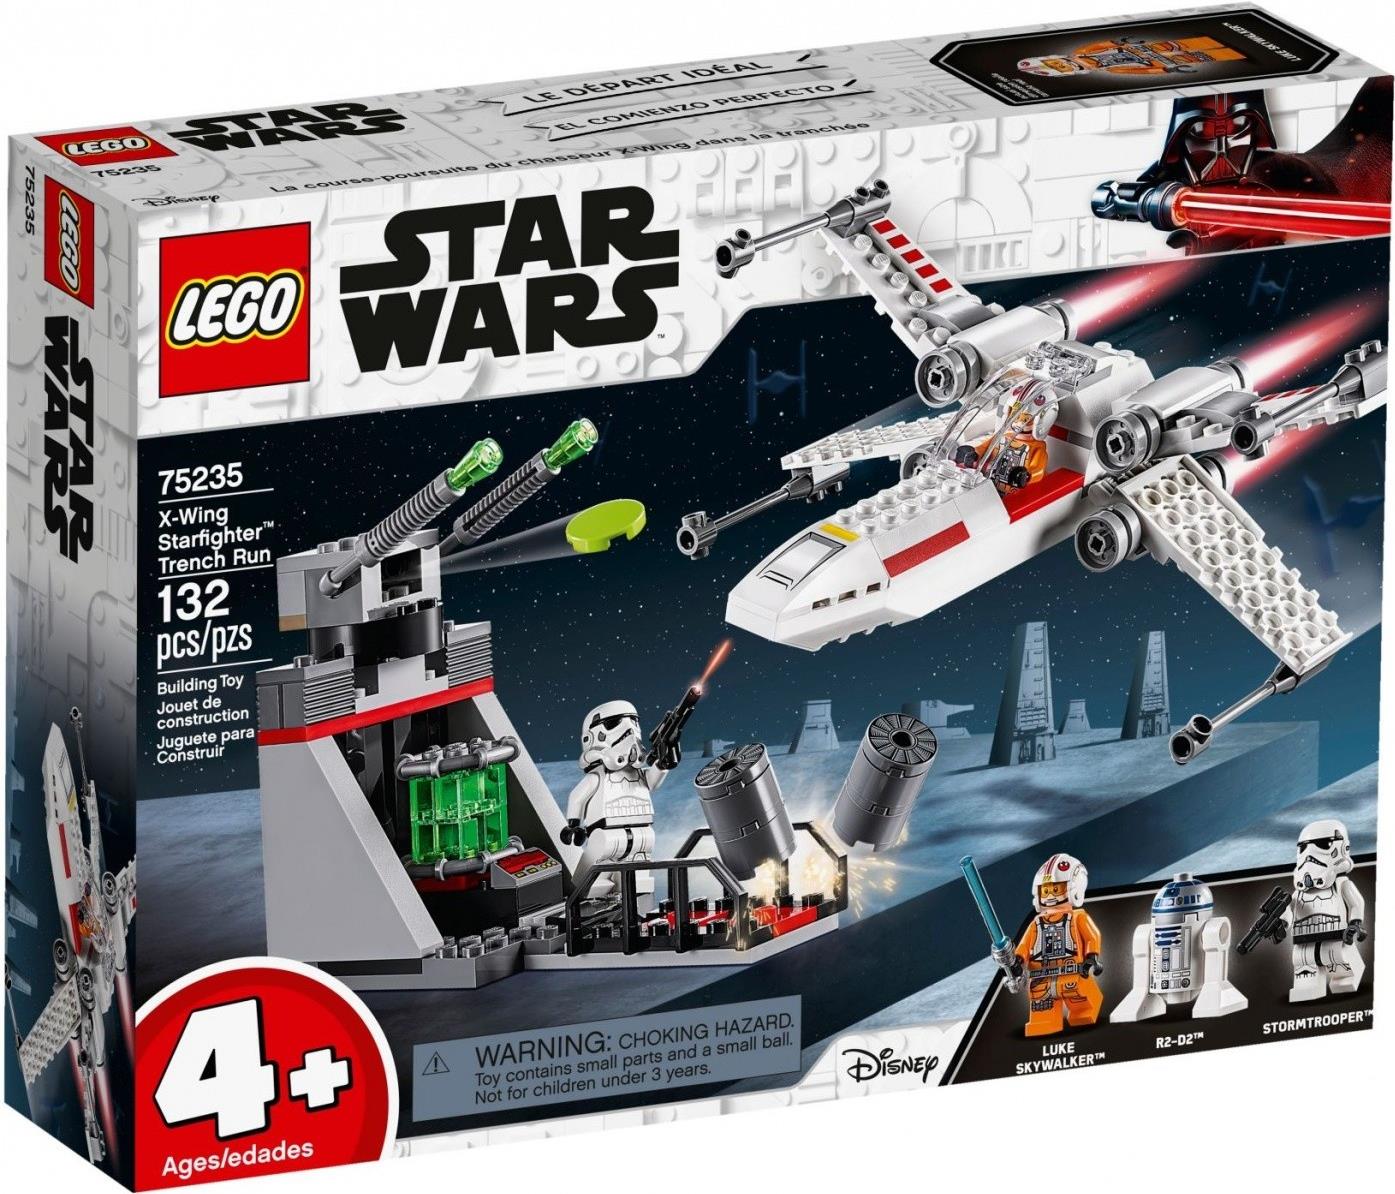 LEGO Star Wars 75235 X-Wing Starfighter (4+) (75235)